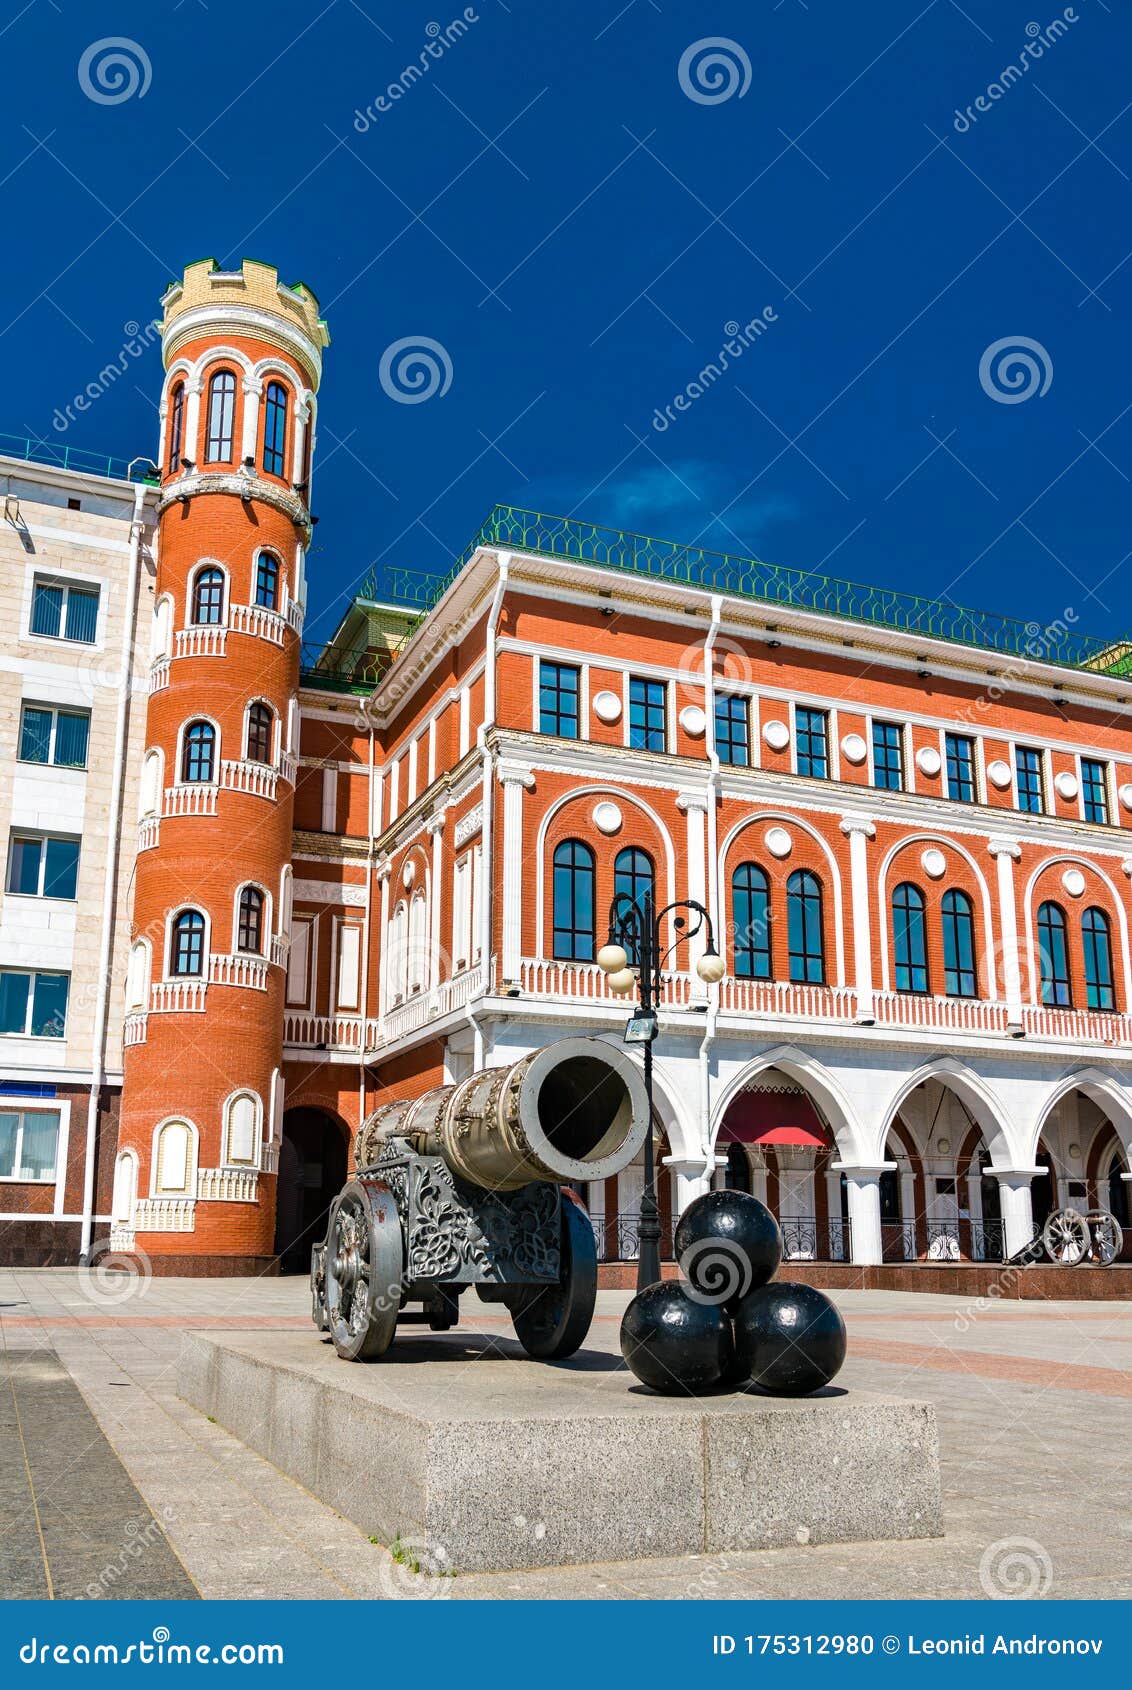 tsar cannon and national art gallery in yoshkar-ola, russia